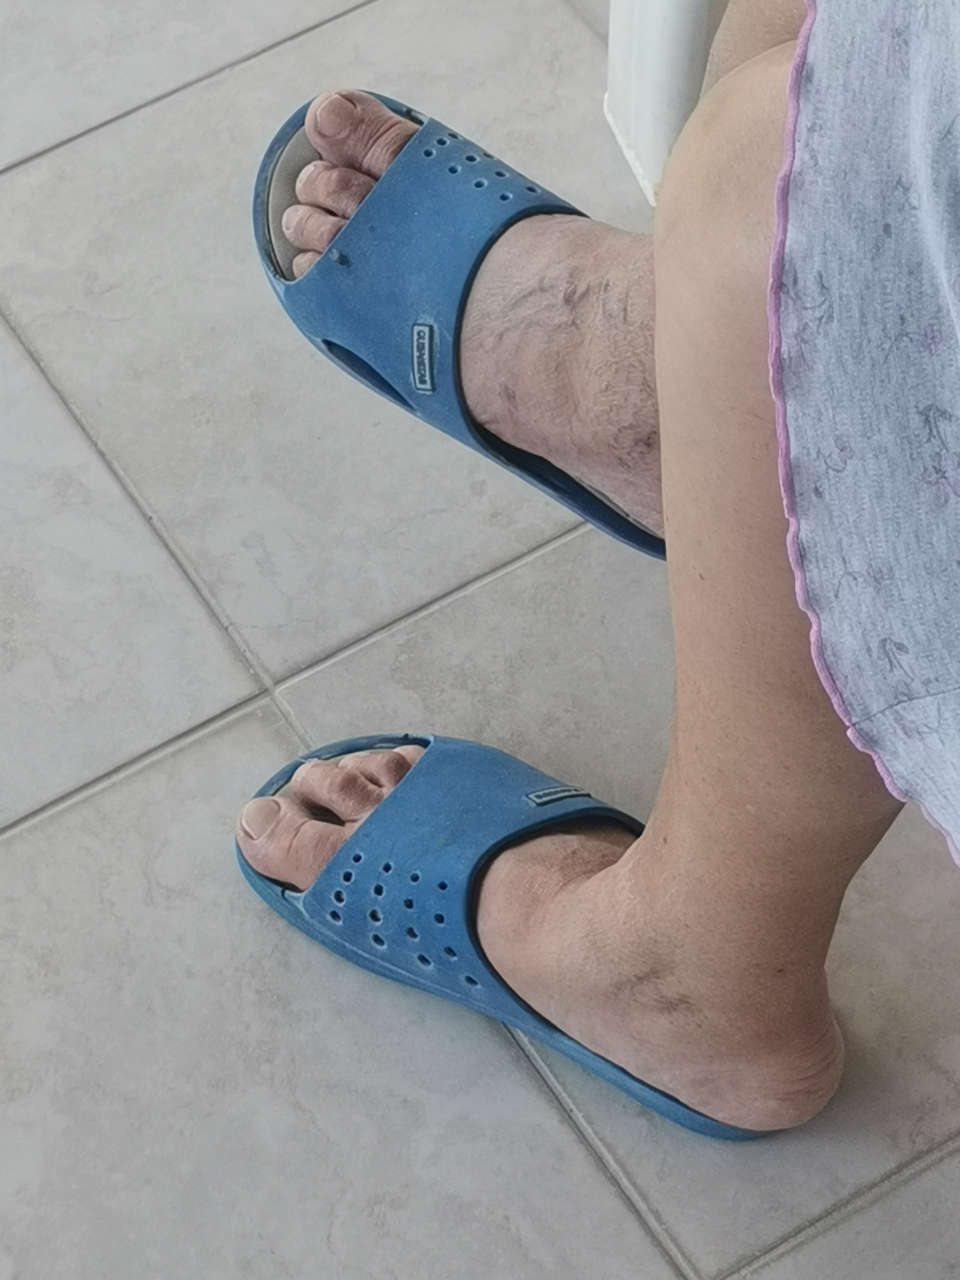 Loula Ioannidou Feet